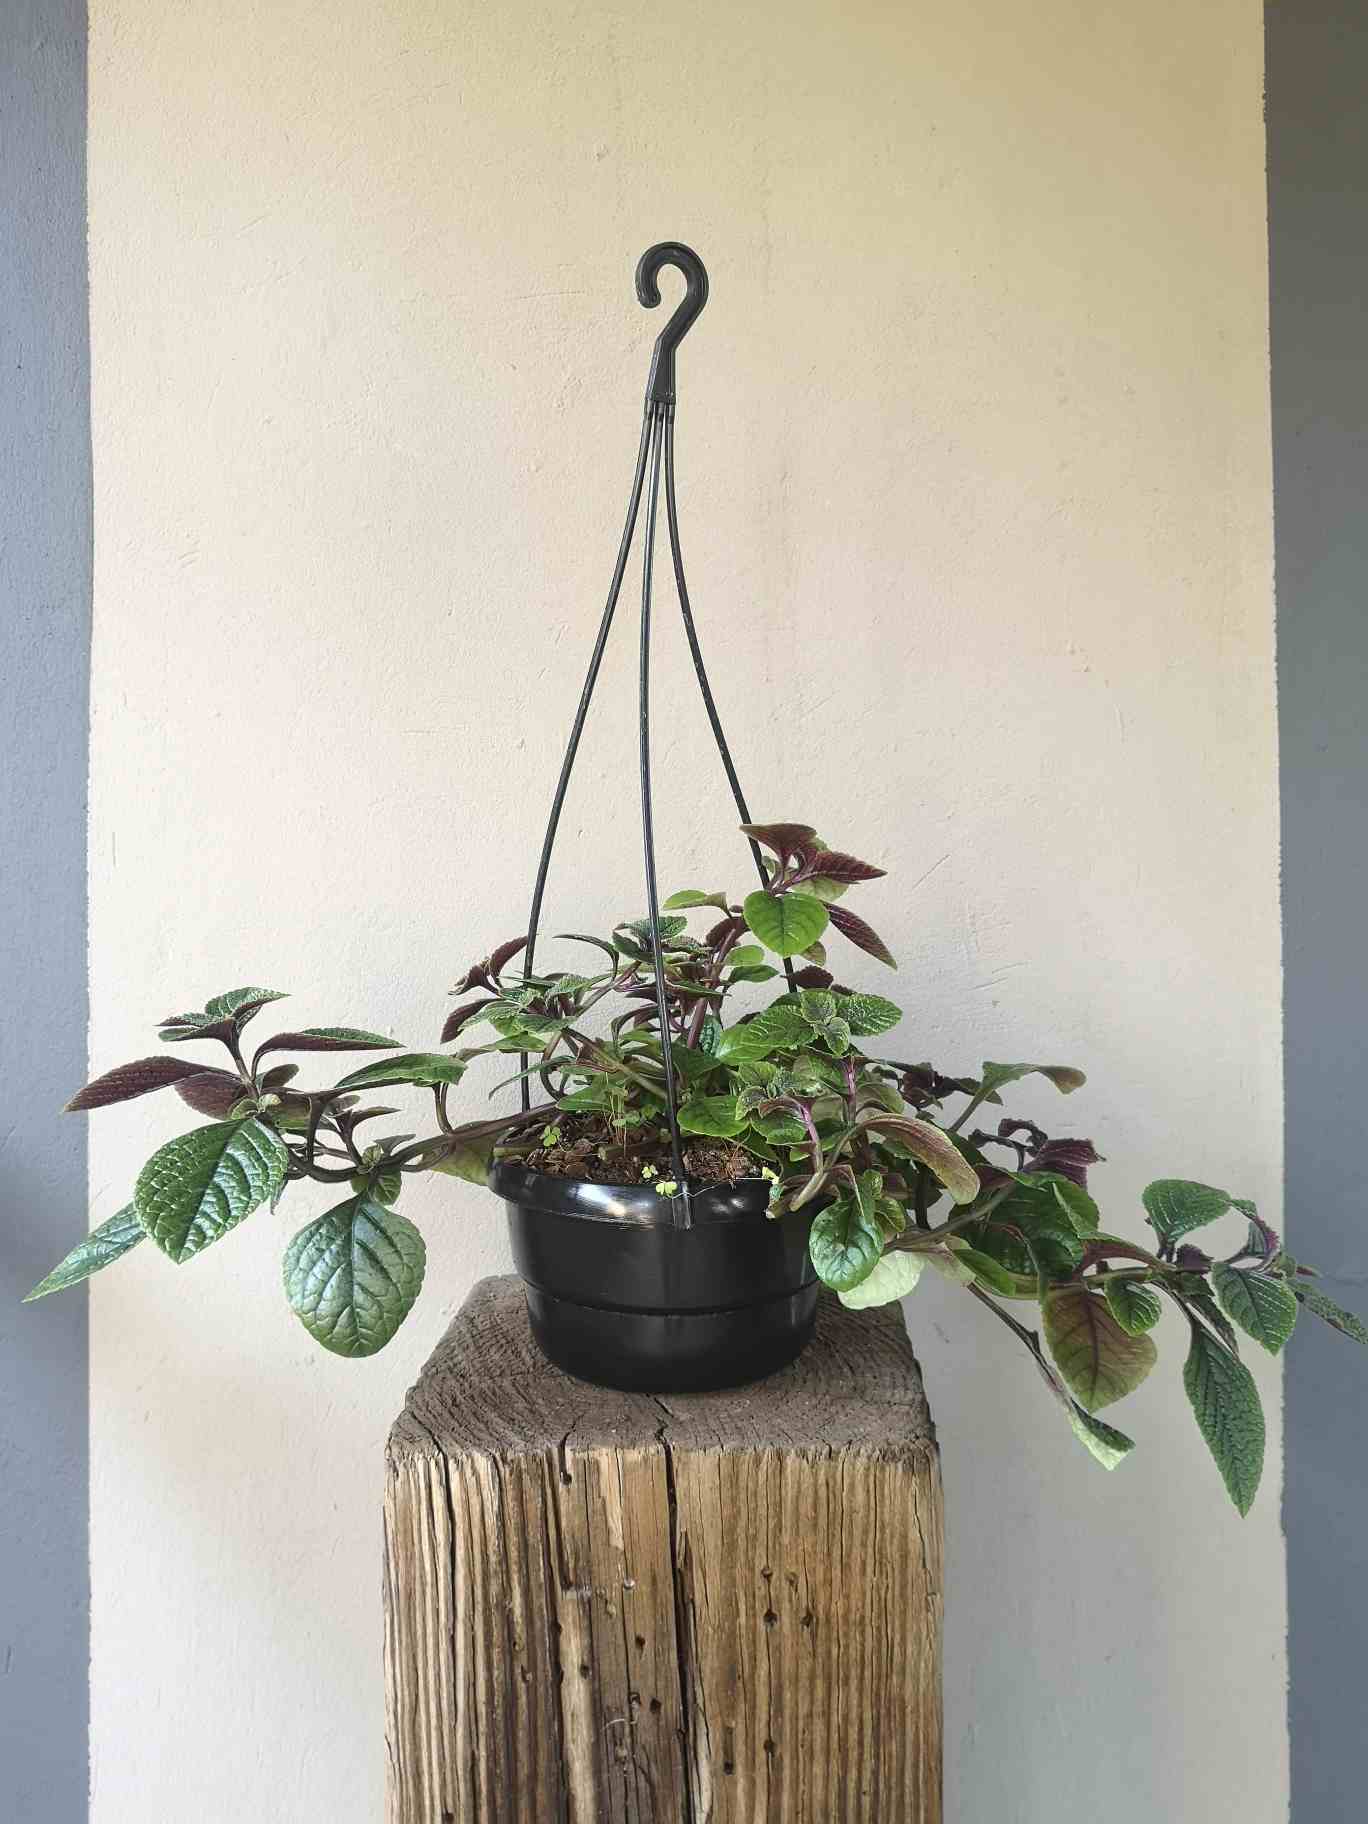 Plectranthus Baurii hanging pot